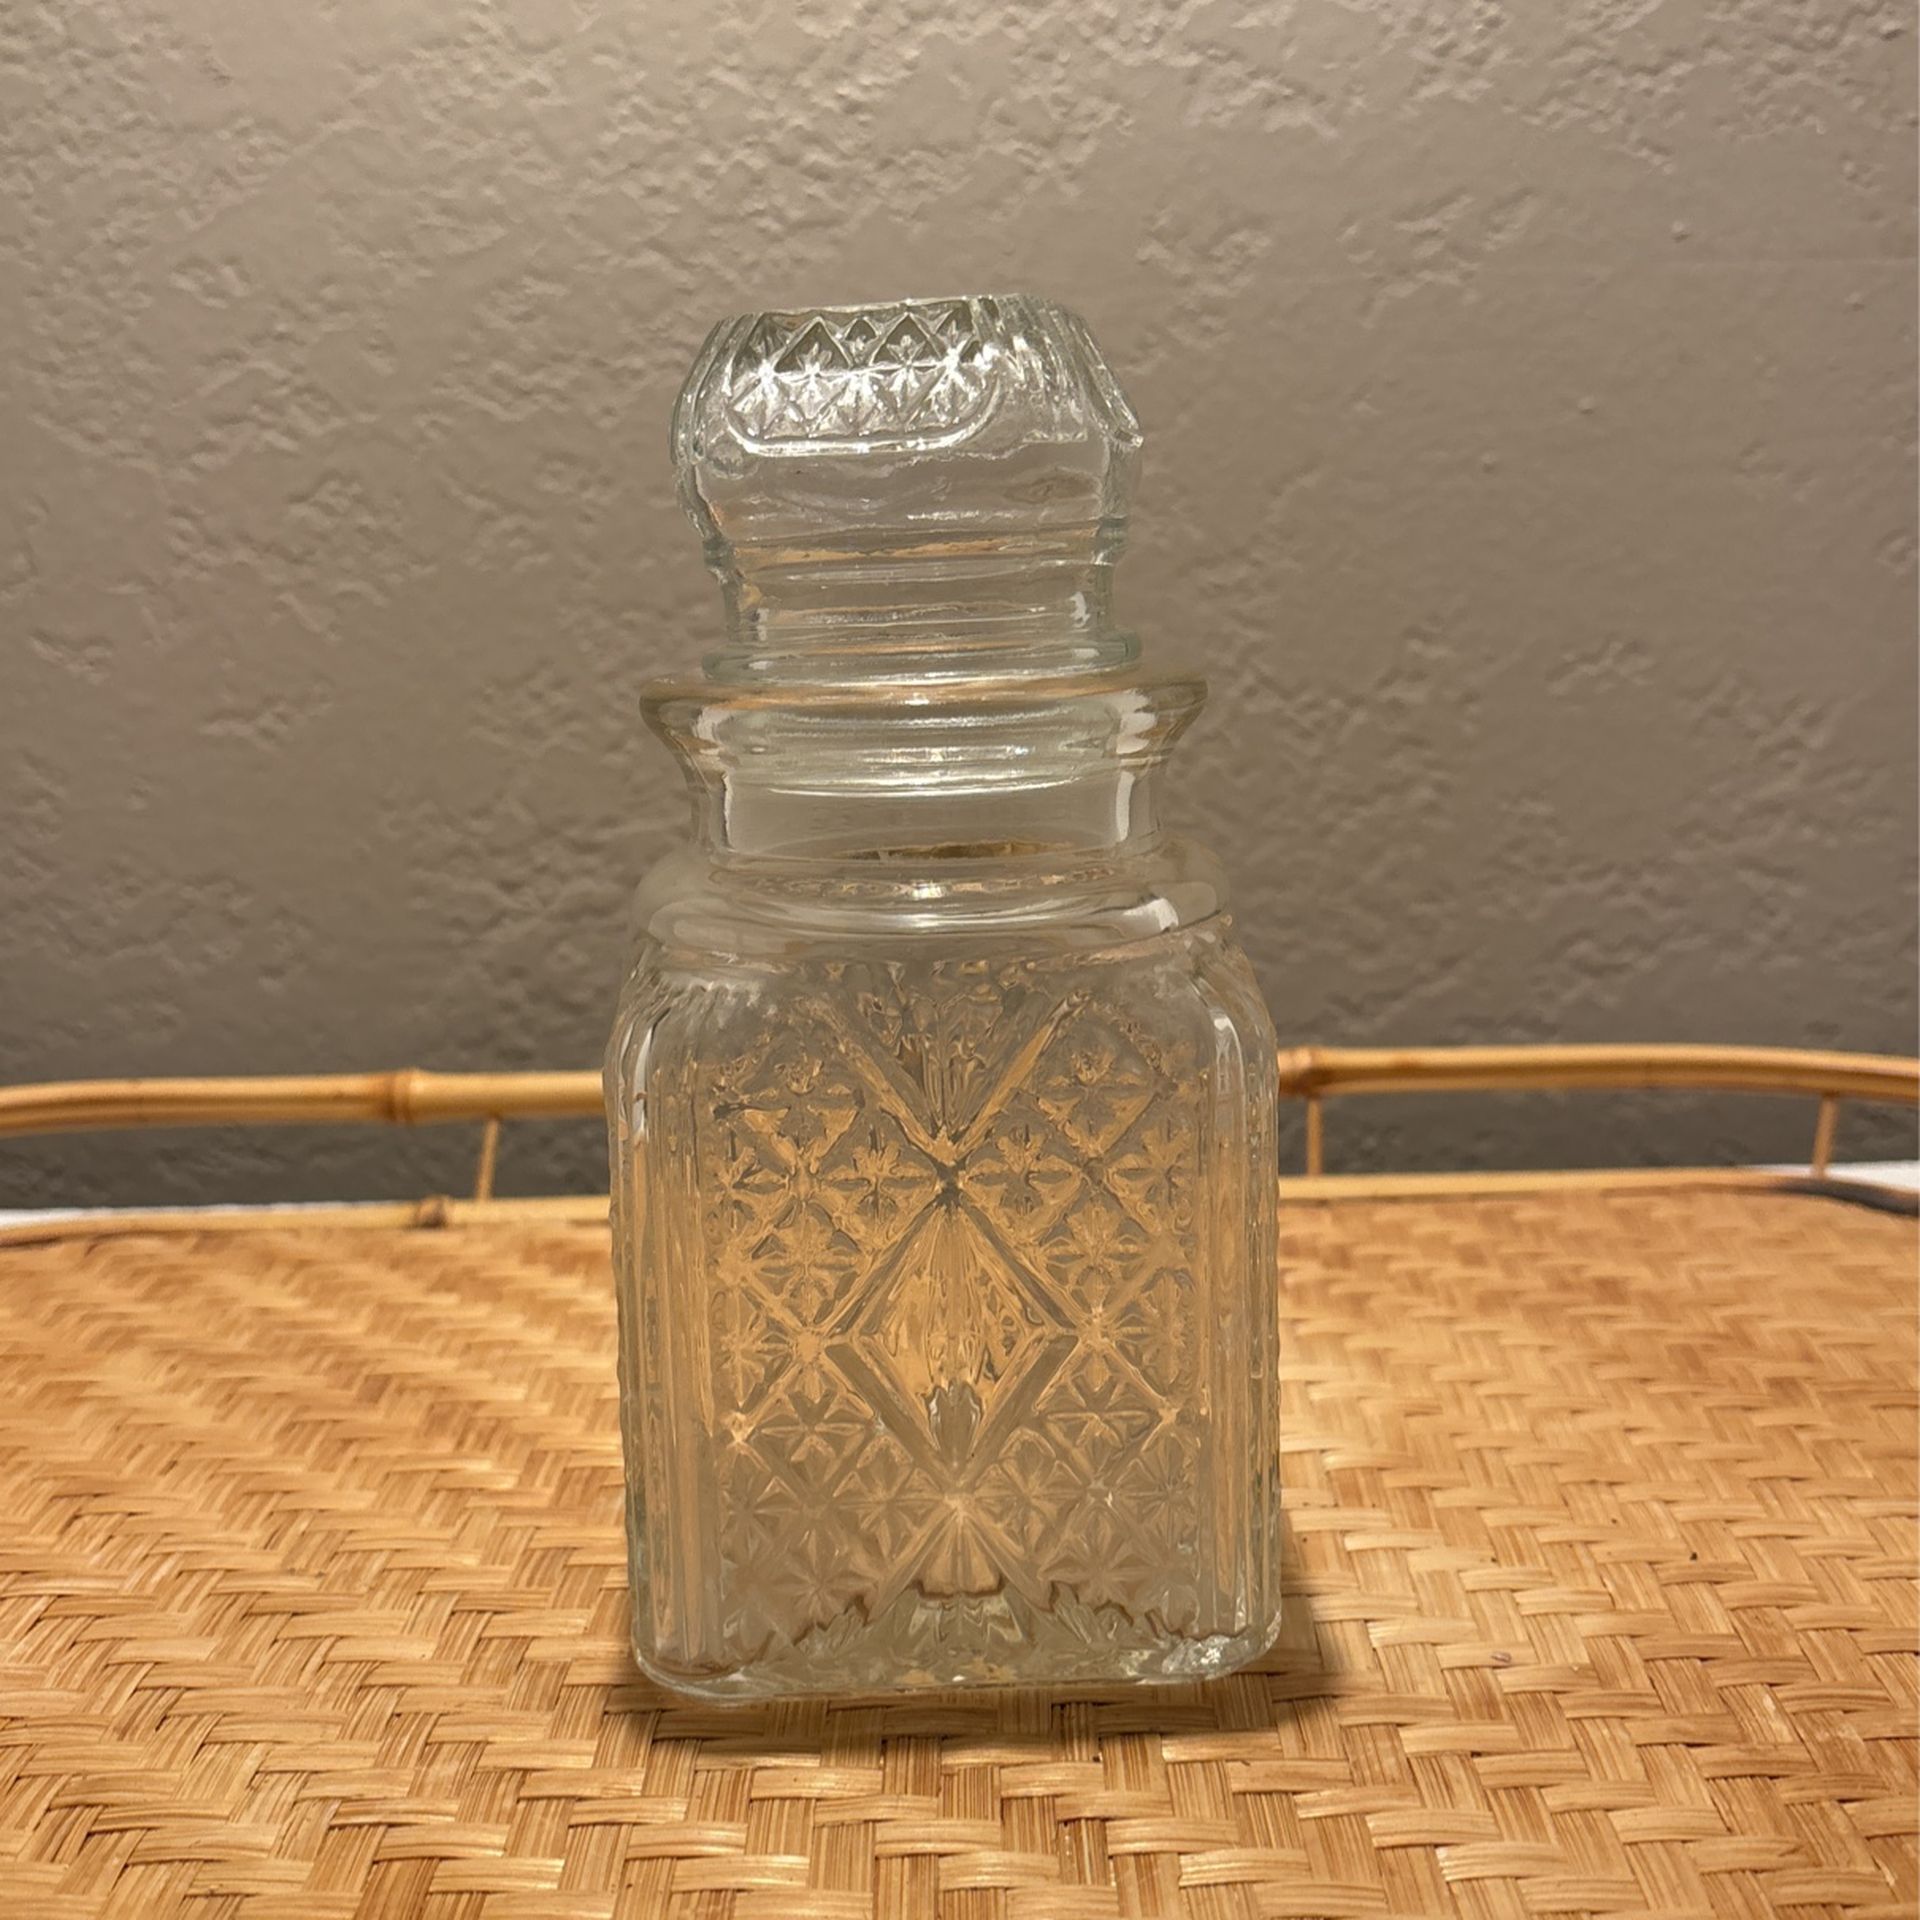 Vintage Antique Decorative Pressed Glass Candy Jar